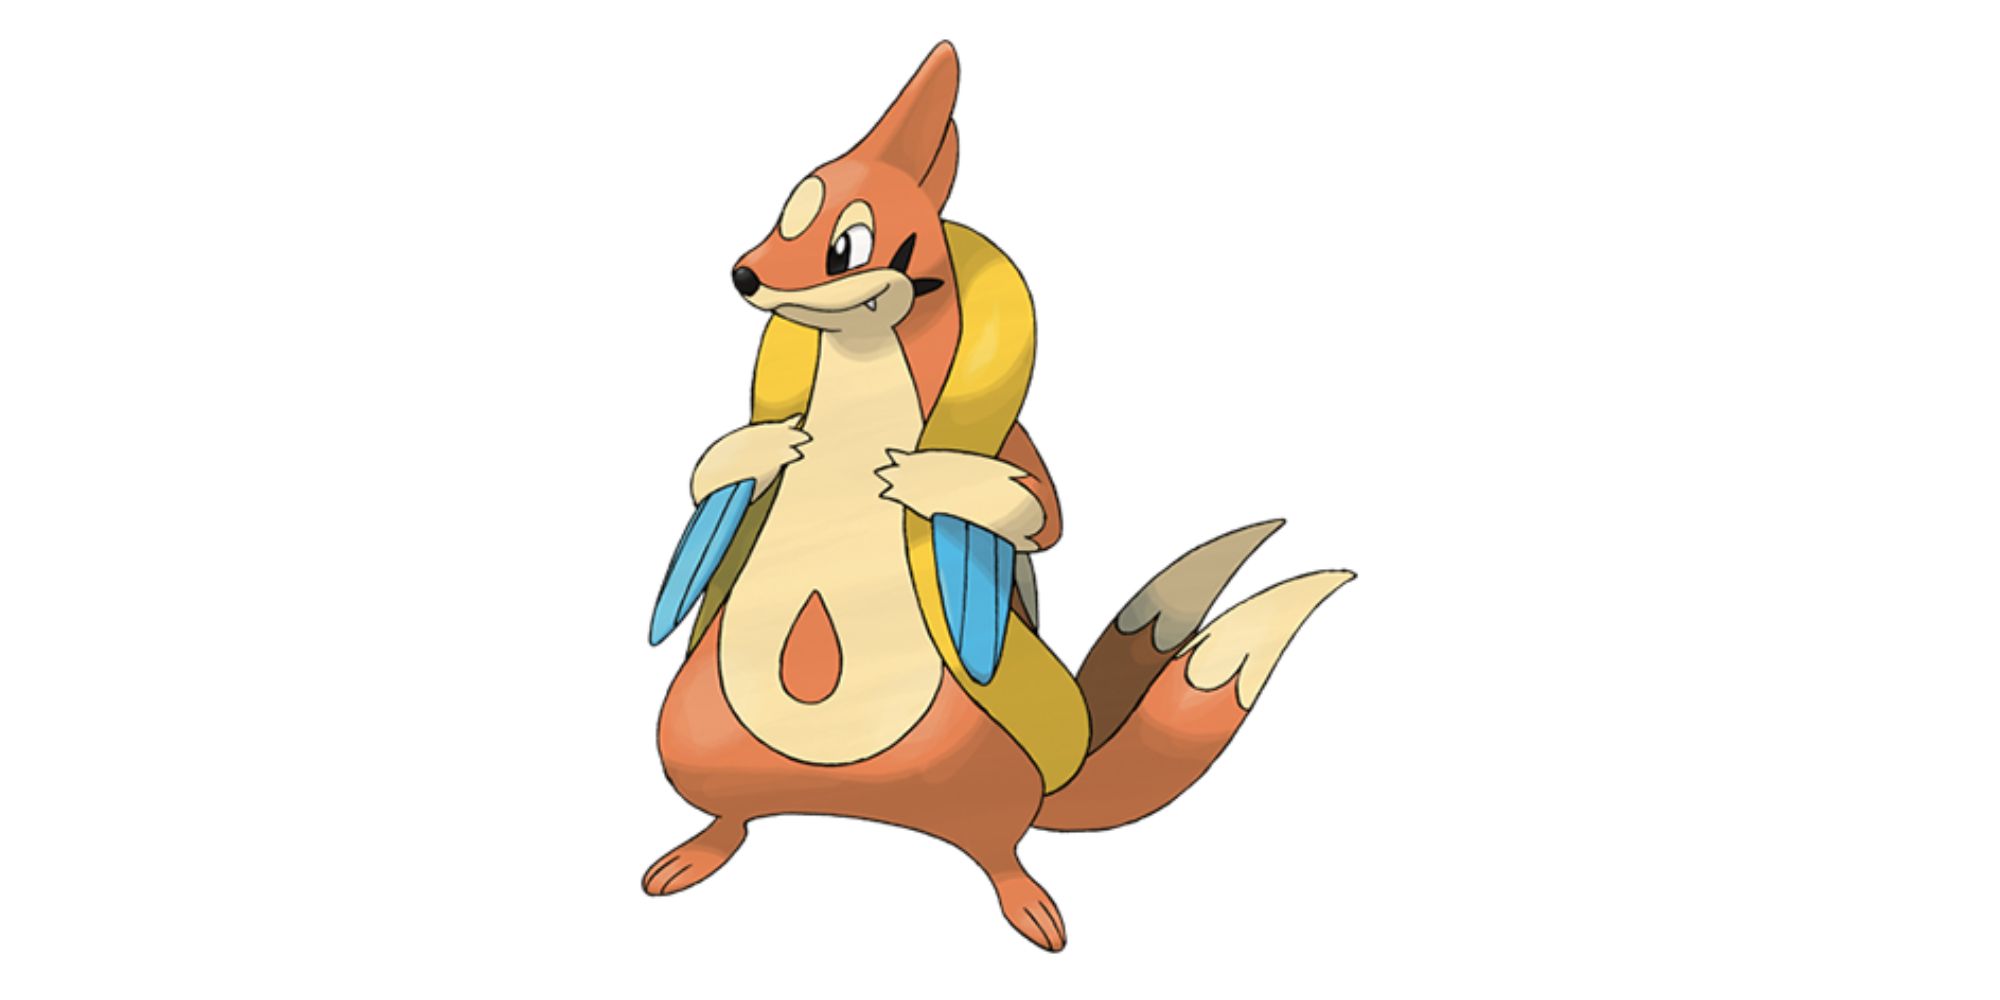 Hardest Pokémon to find in Pokémon GO - Floatzel - Water-type Pokémon wears a floatation sac while attacking its prey